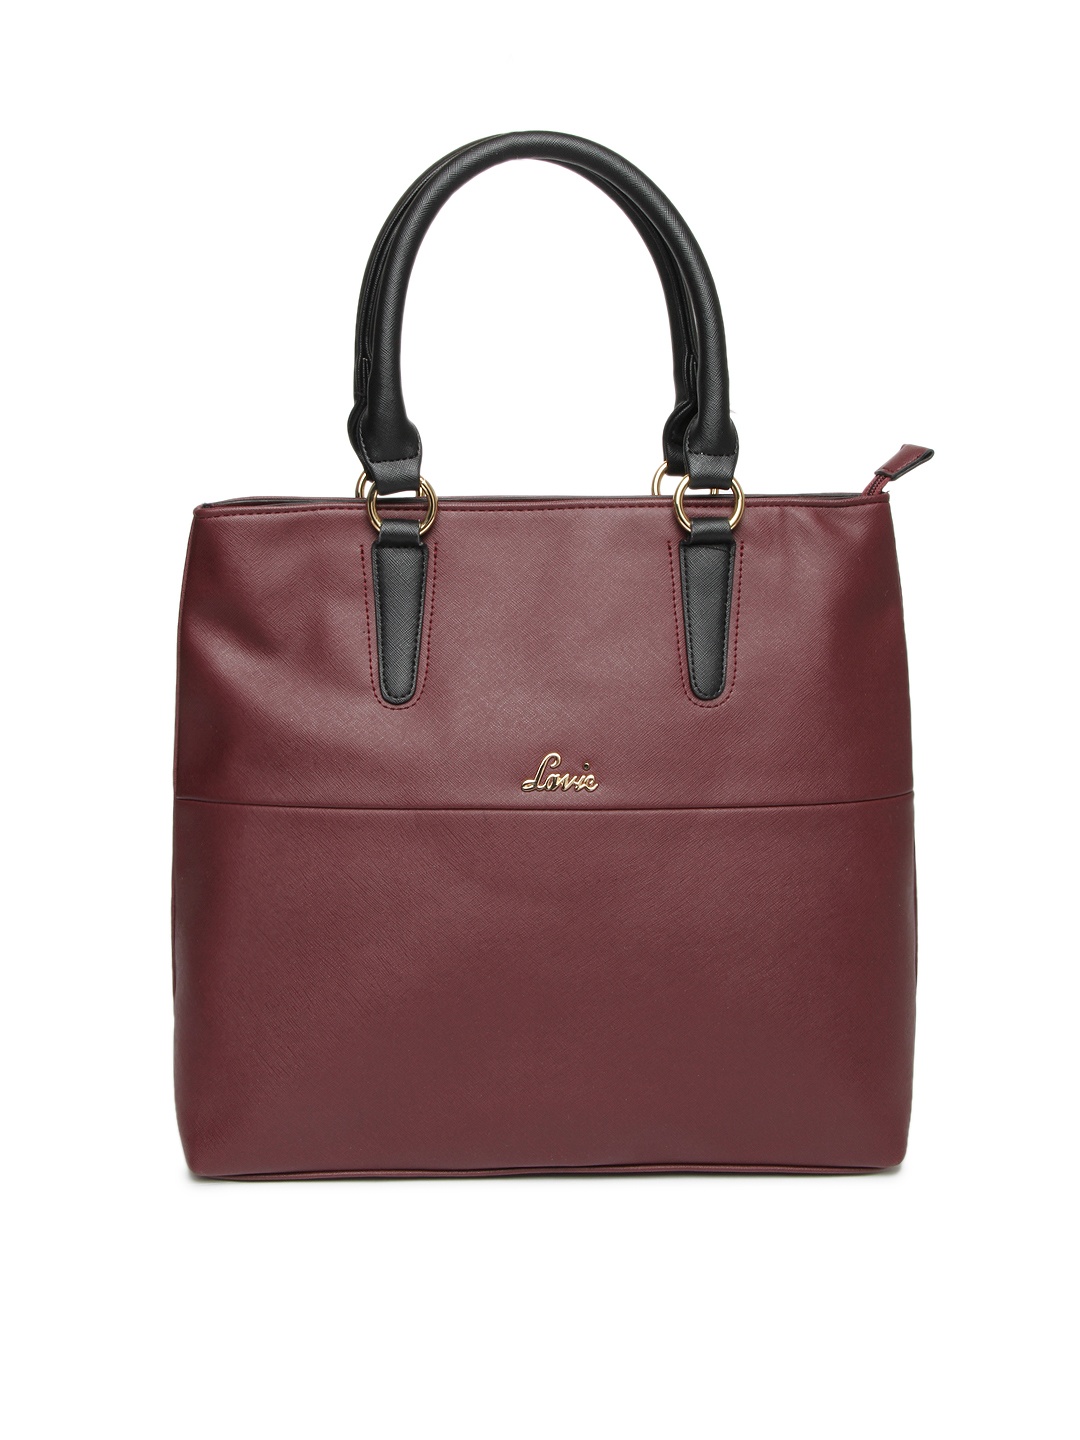 Myntra Lavie Burgundy Handbag 404800 | Buy Myntra Lavie Handbags at ...